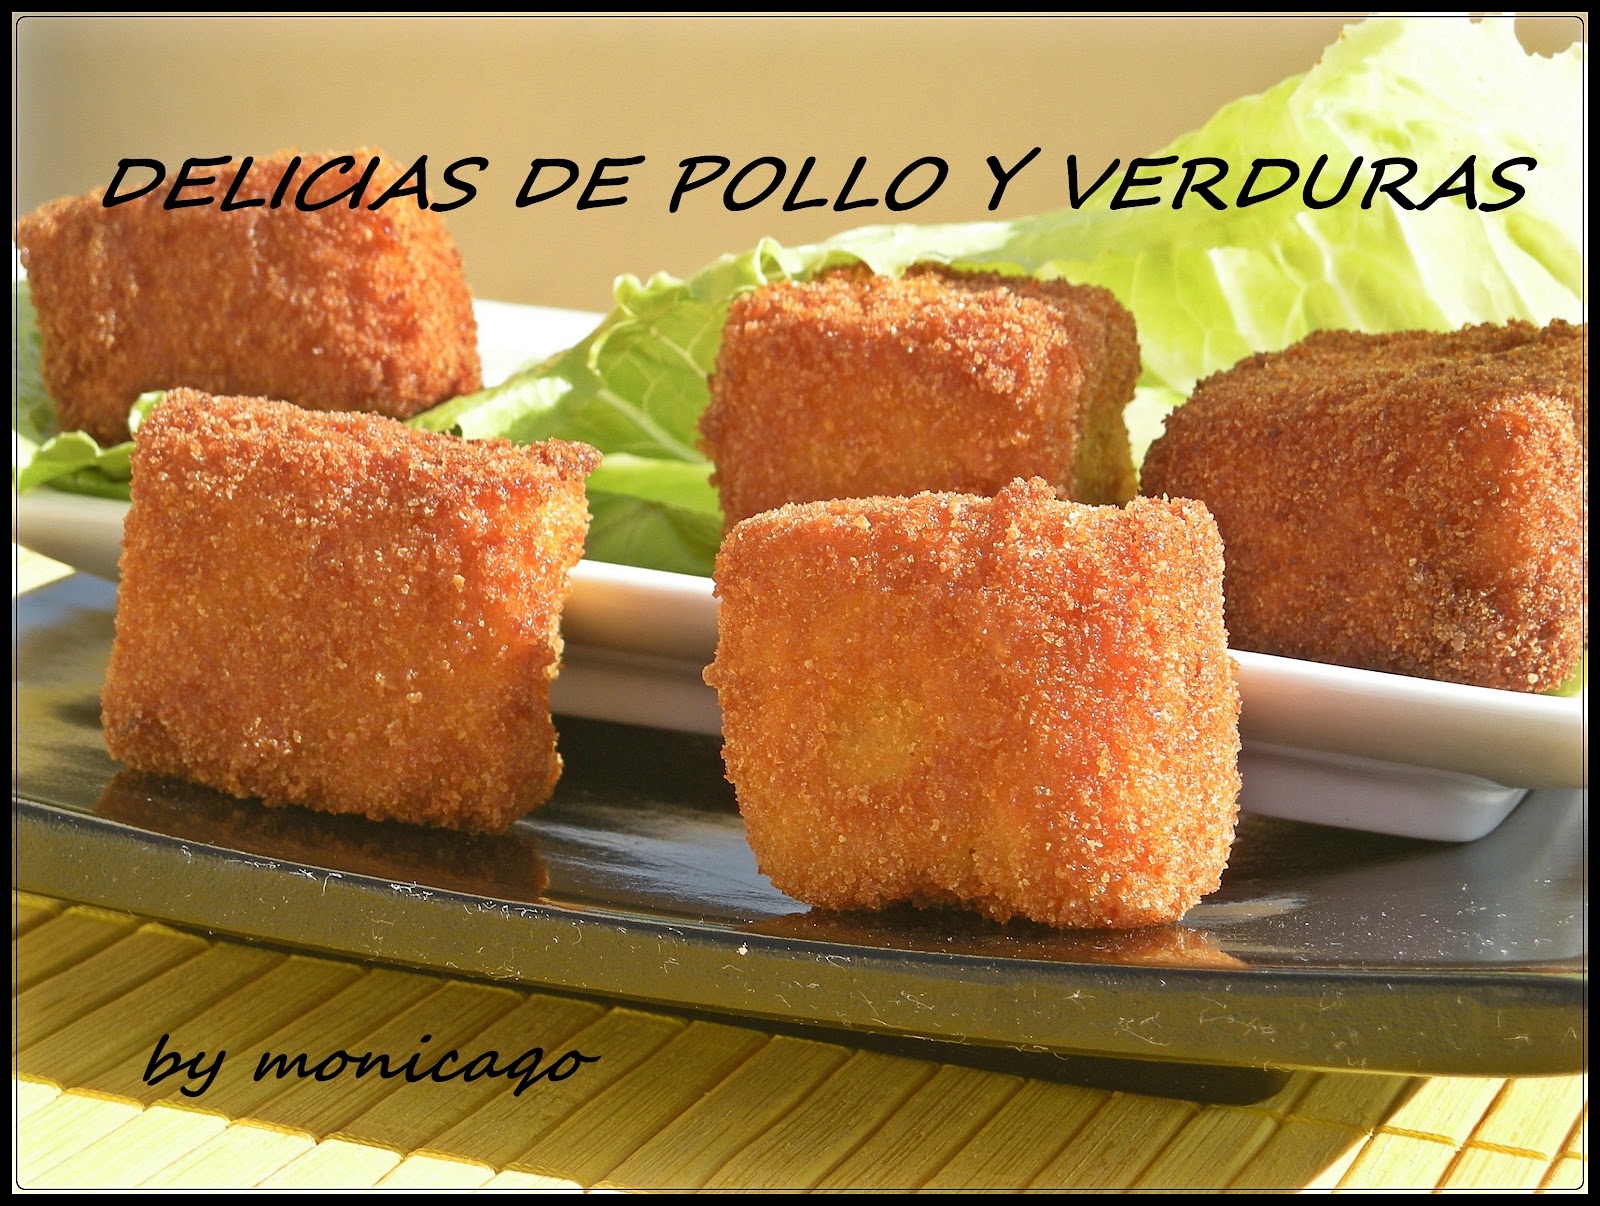 http://3.bp.blogspot.com/-GjpSSFuzN1w/UEIWNuJ49HI/AAAAAAAAAZU/-jZi287tv1U/s1600/delicias+de+verdura+y+pollo+2.JPG